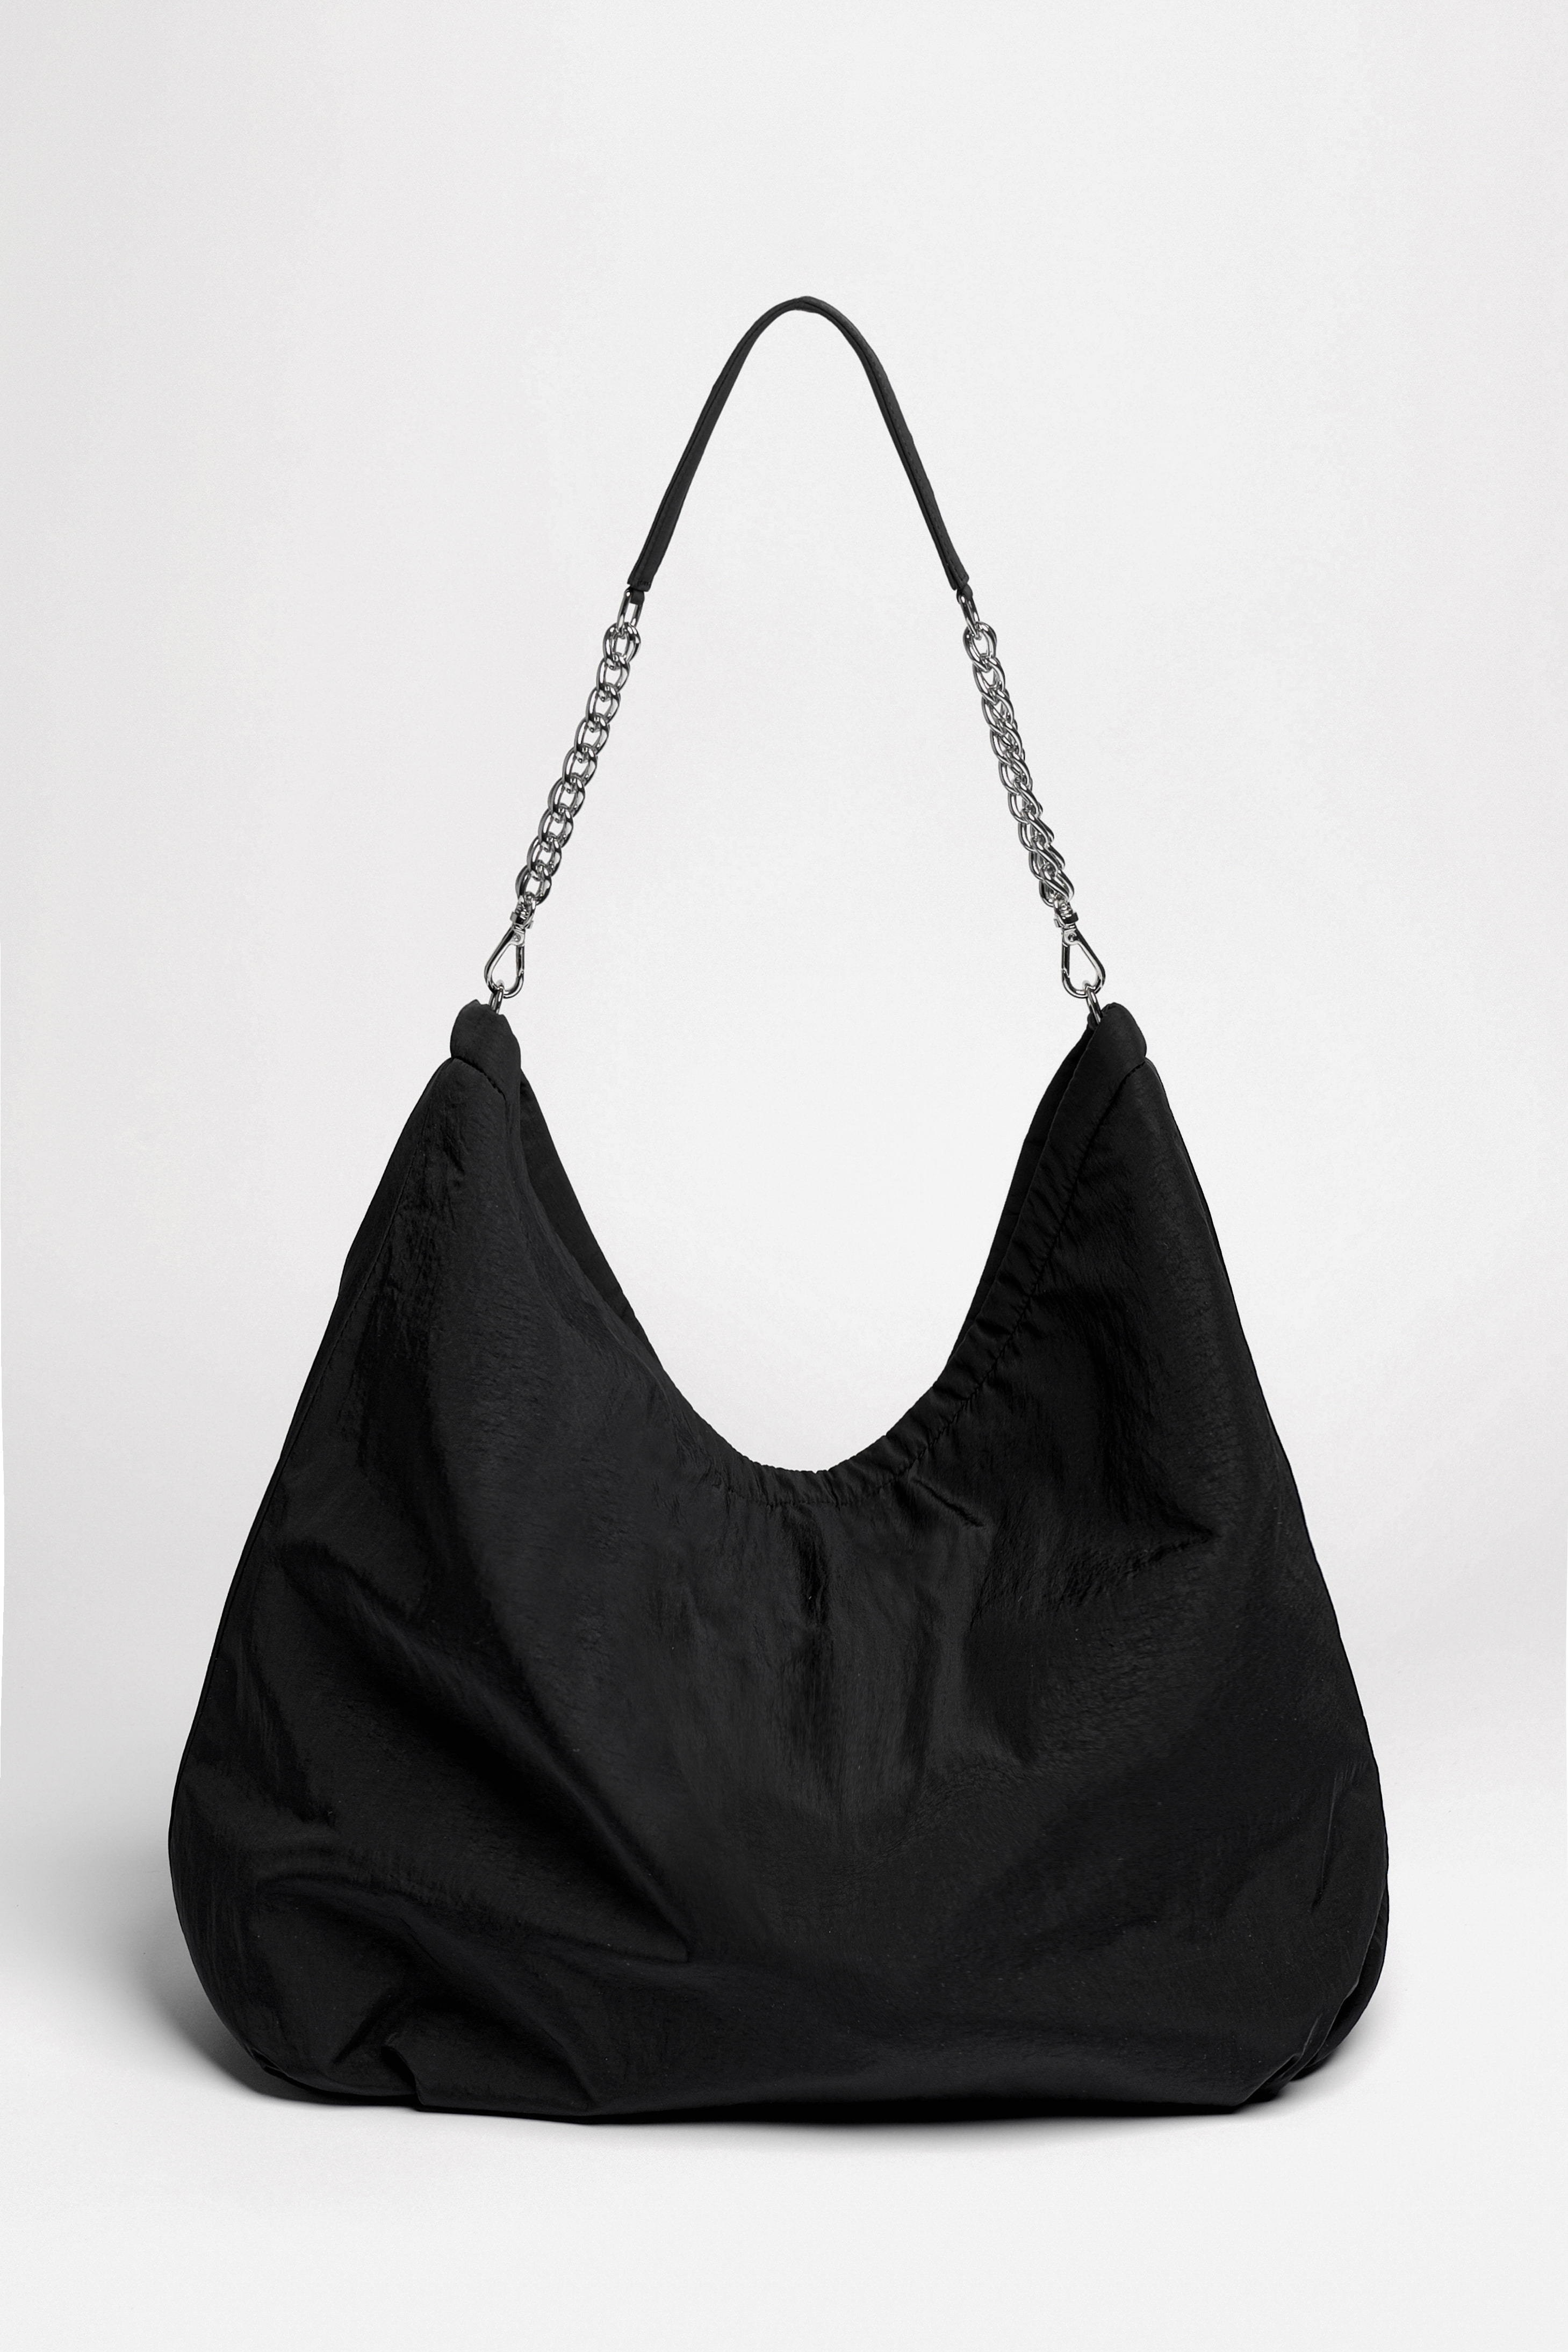 CHAIN HOBO BAG (BLACK)